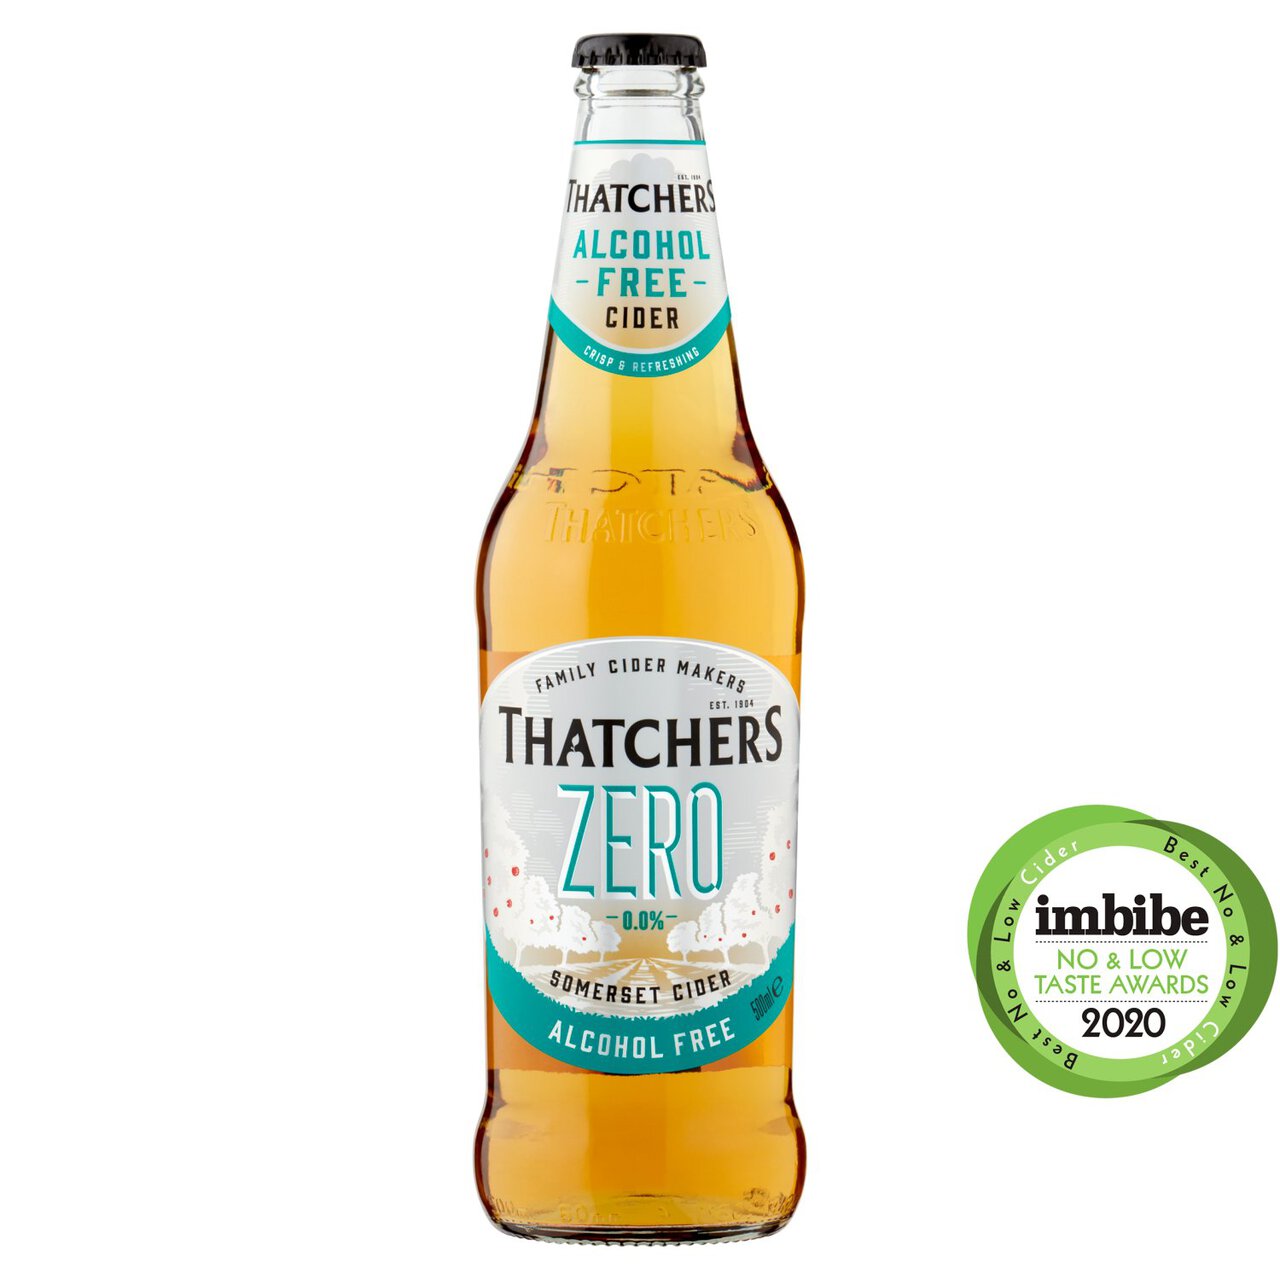 Thatchers Zero Alcohol Free Cider 500ml